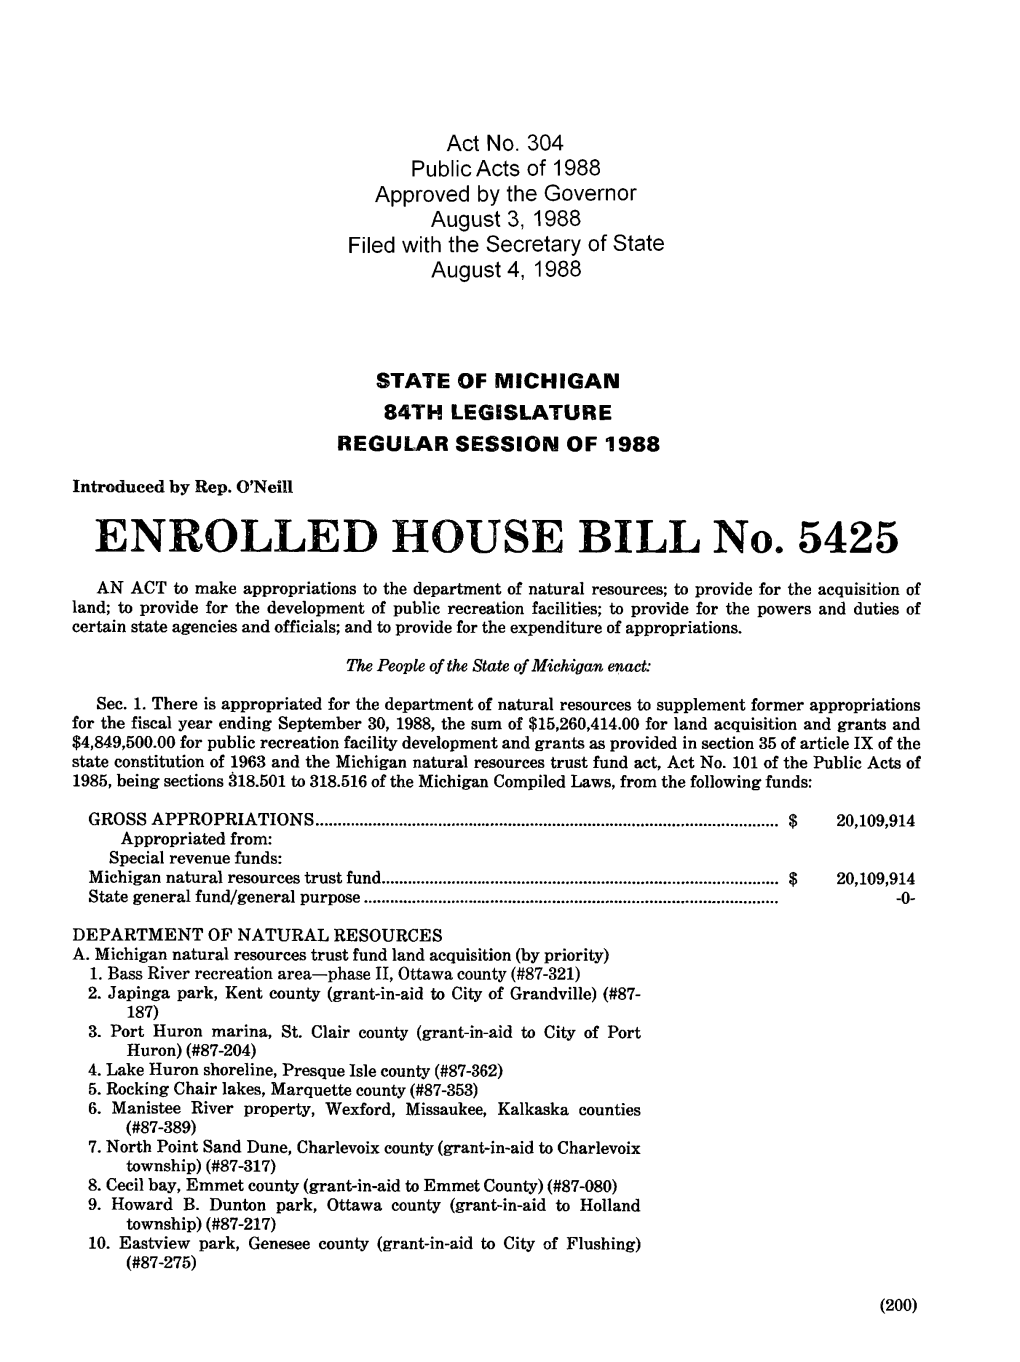 1987 House Enrolled Bill 5425